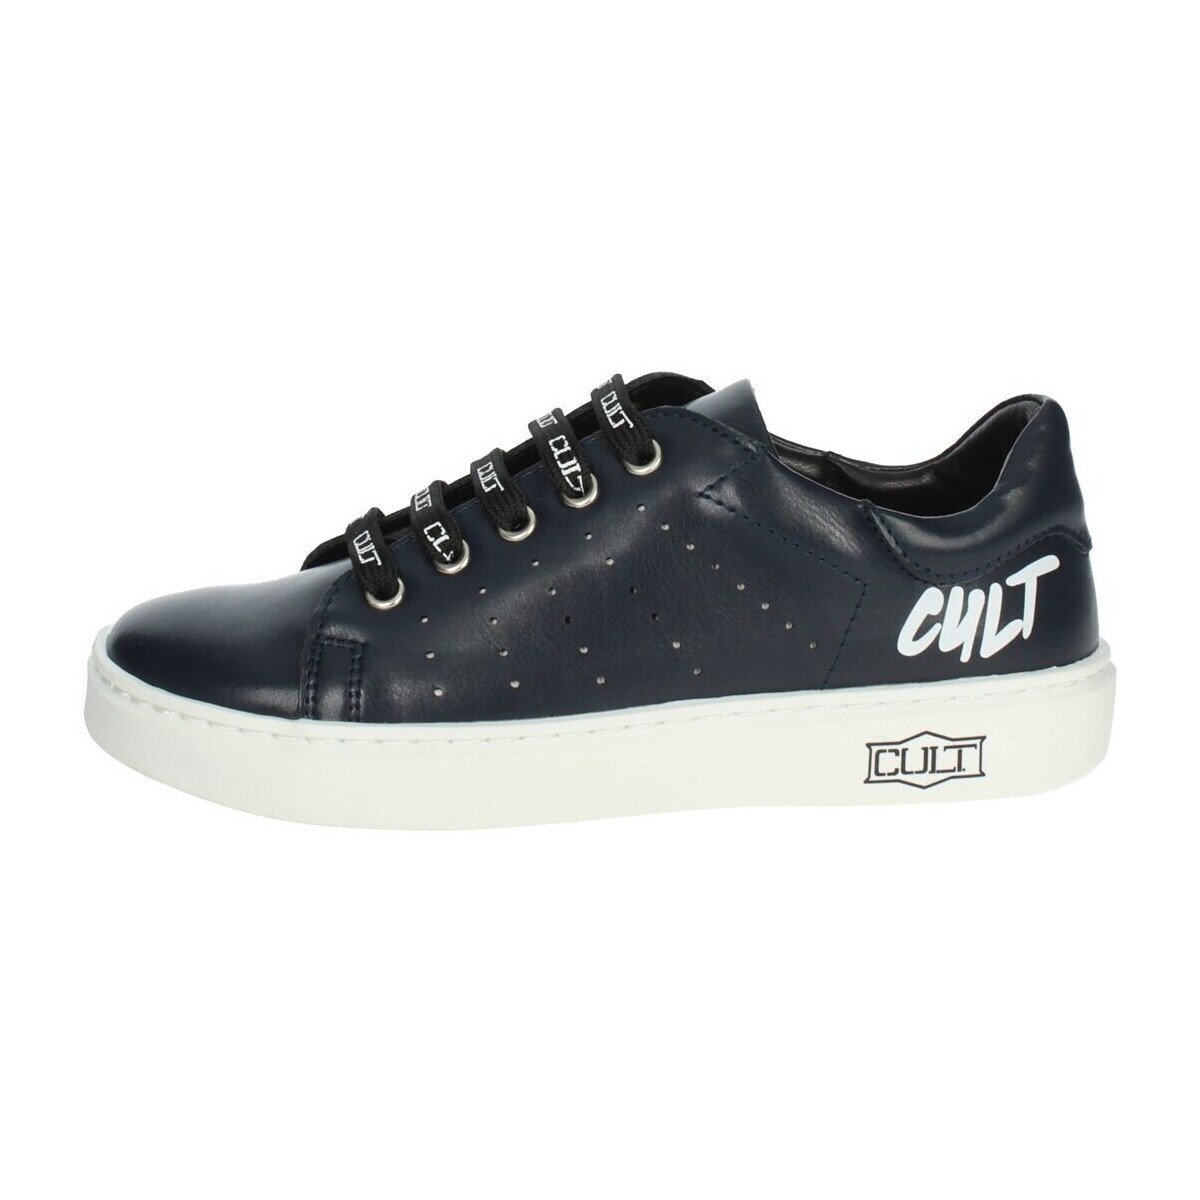 Schuhe Kinder Sneaker High Cult CLJ003001000 Blau